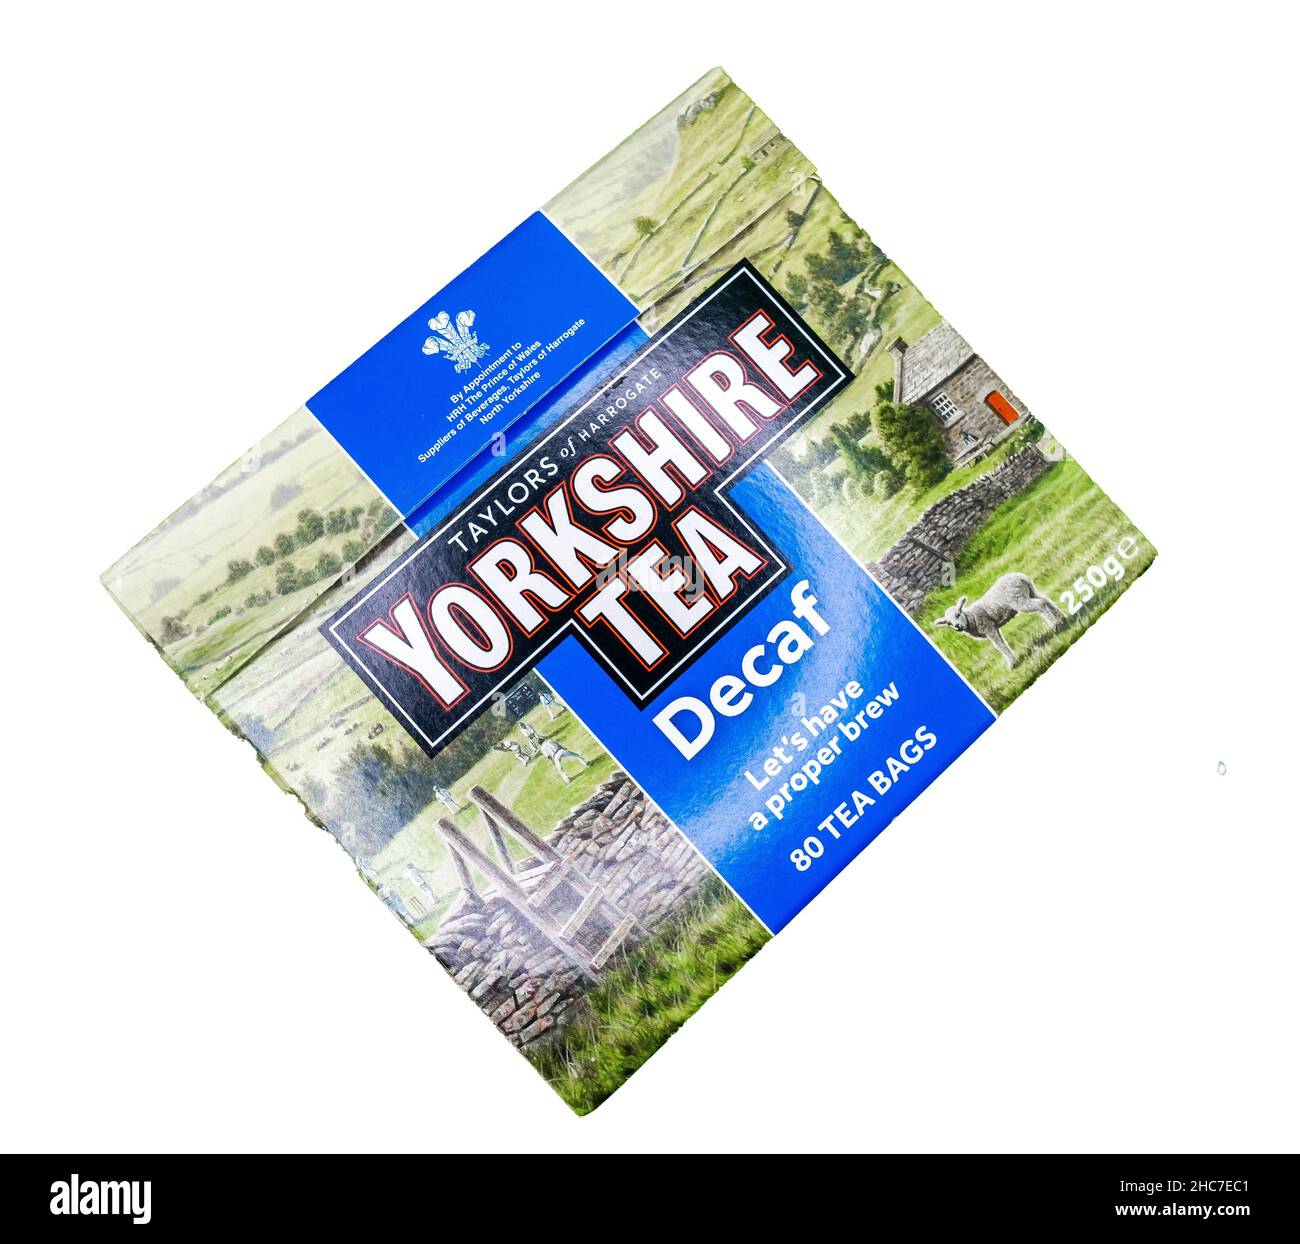 open box of Taylors of Harrogate Yorkshire tea - 240 tea bags showing tea  bags inside Stock Photo - Alamy